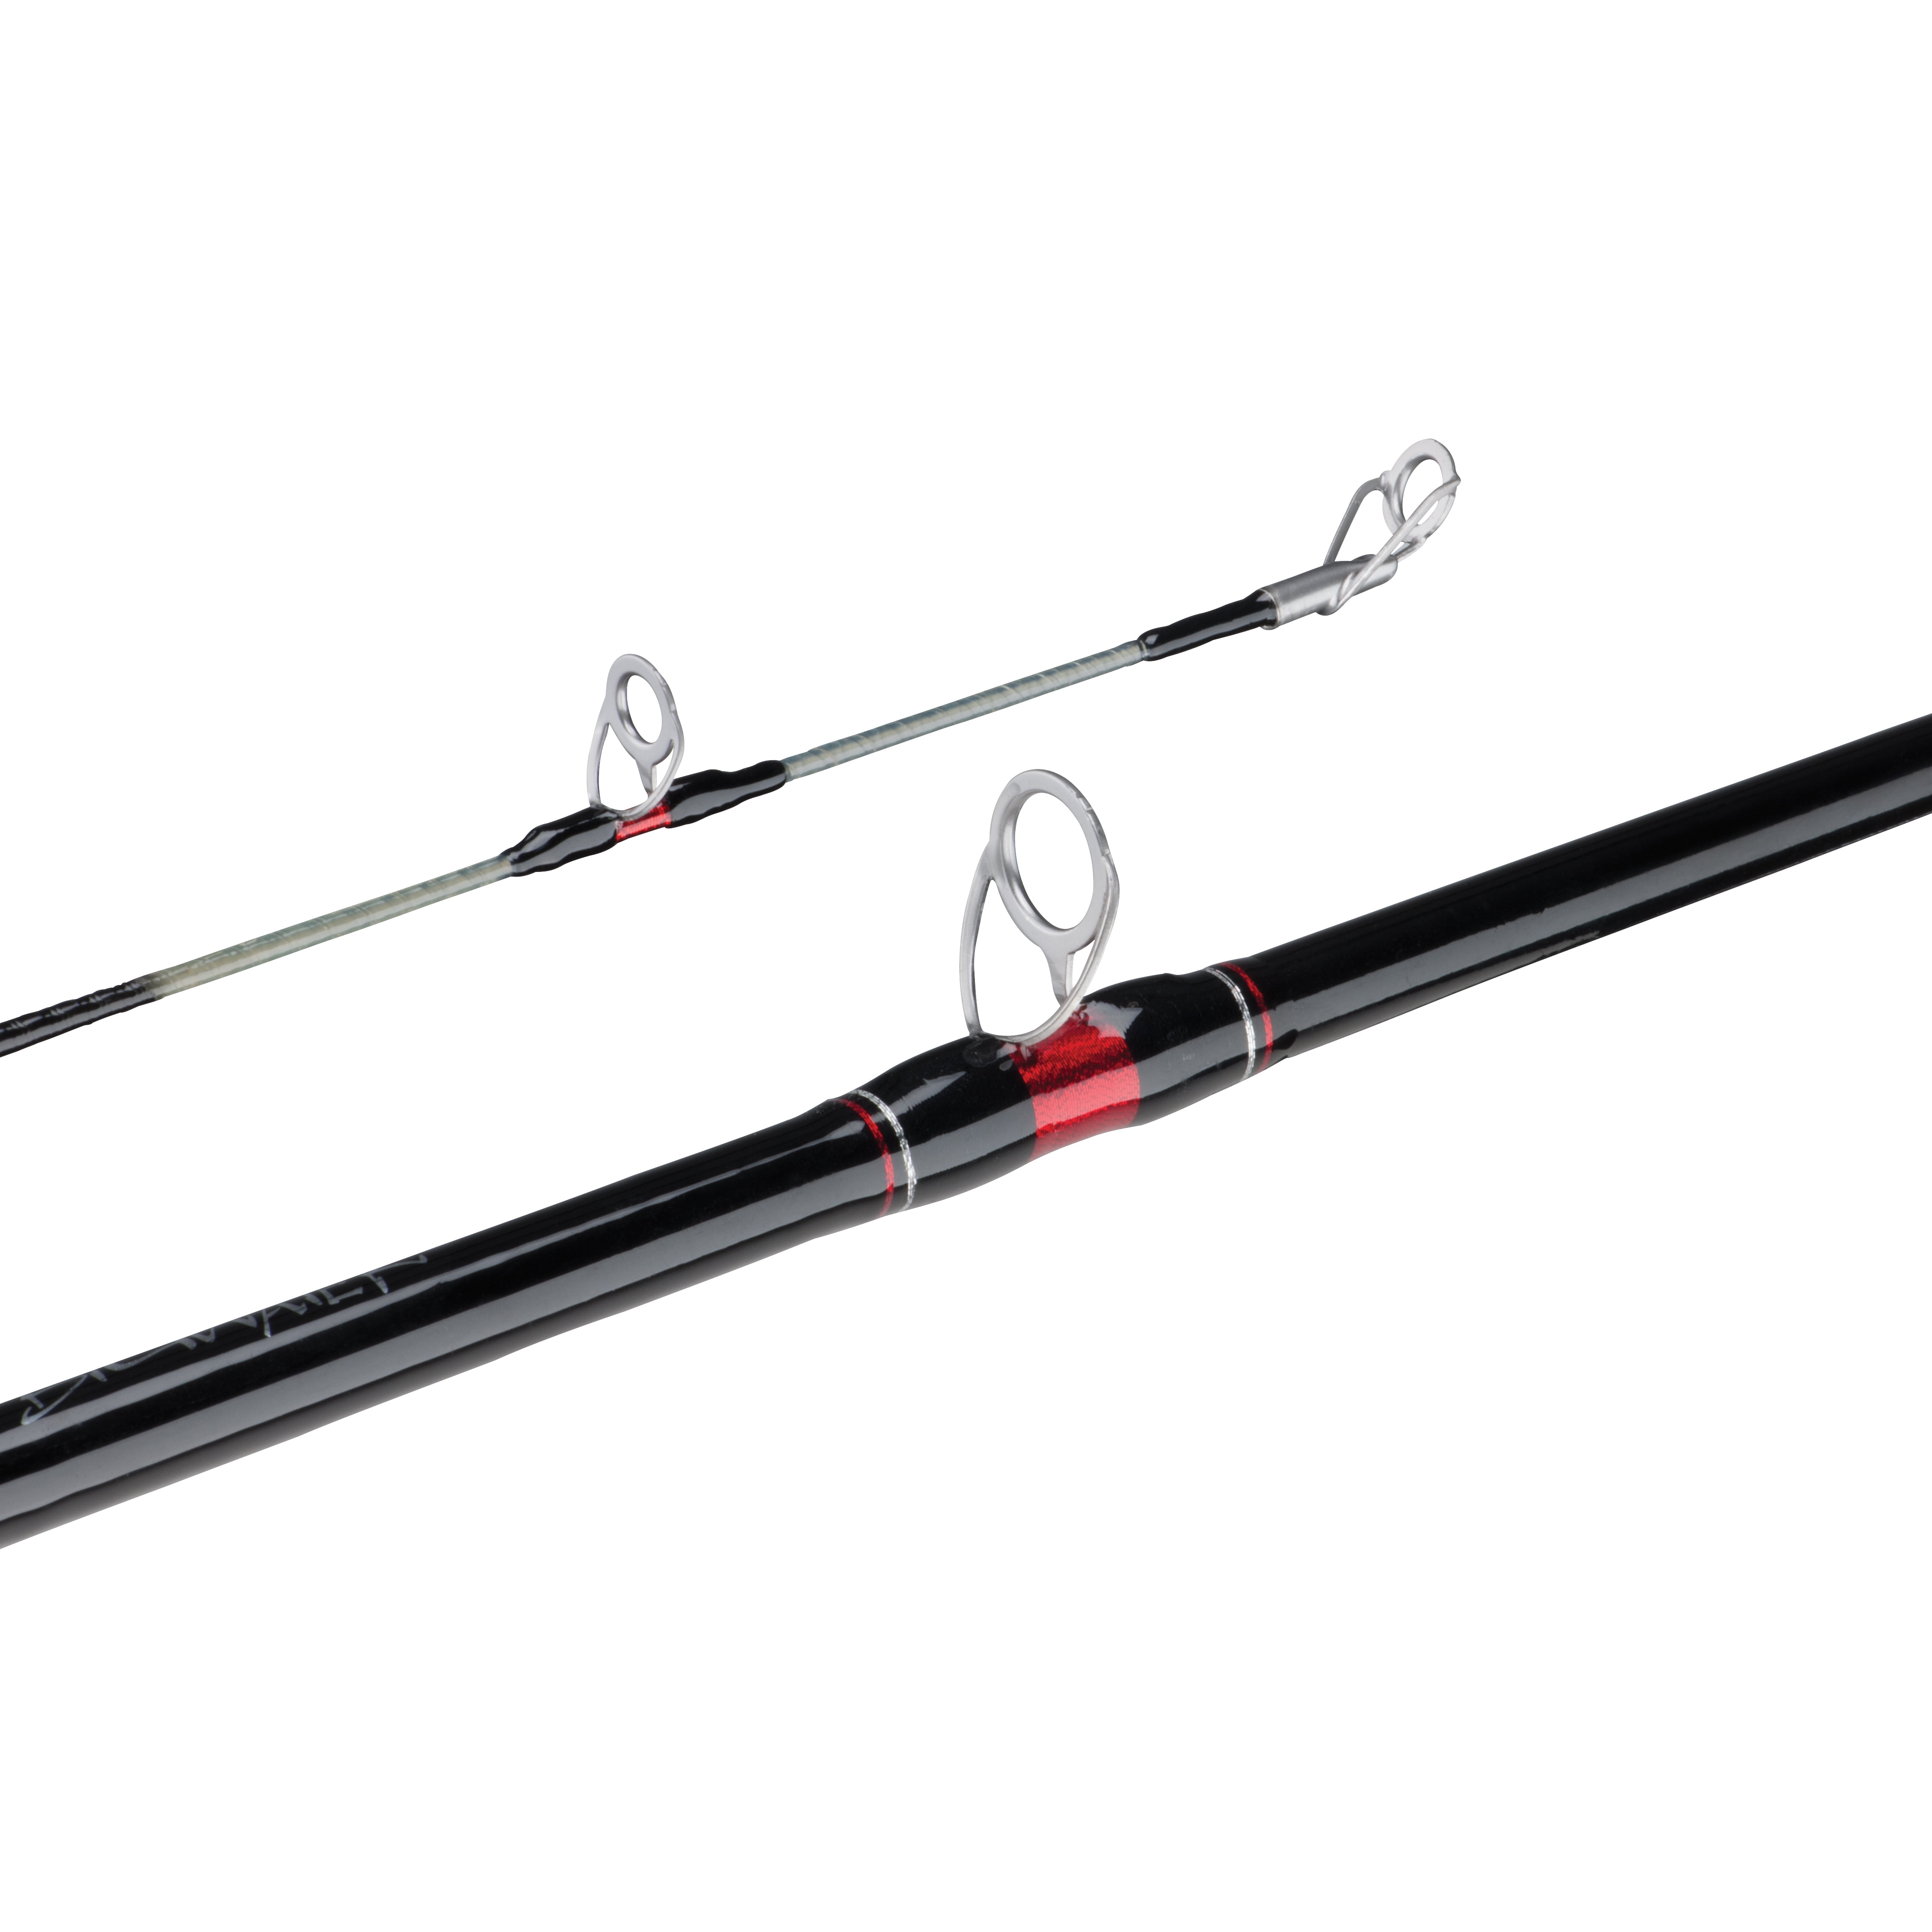 Ugly Stik Bigwater Spinning Fishing Rod 7' Medium Action 2-Piece Rod 